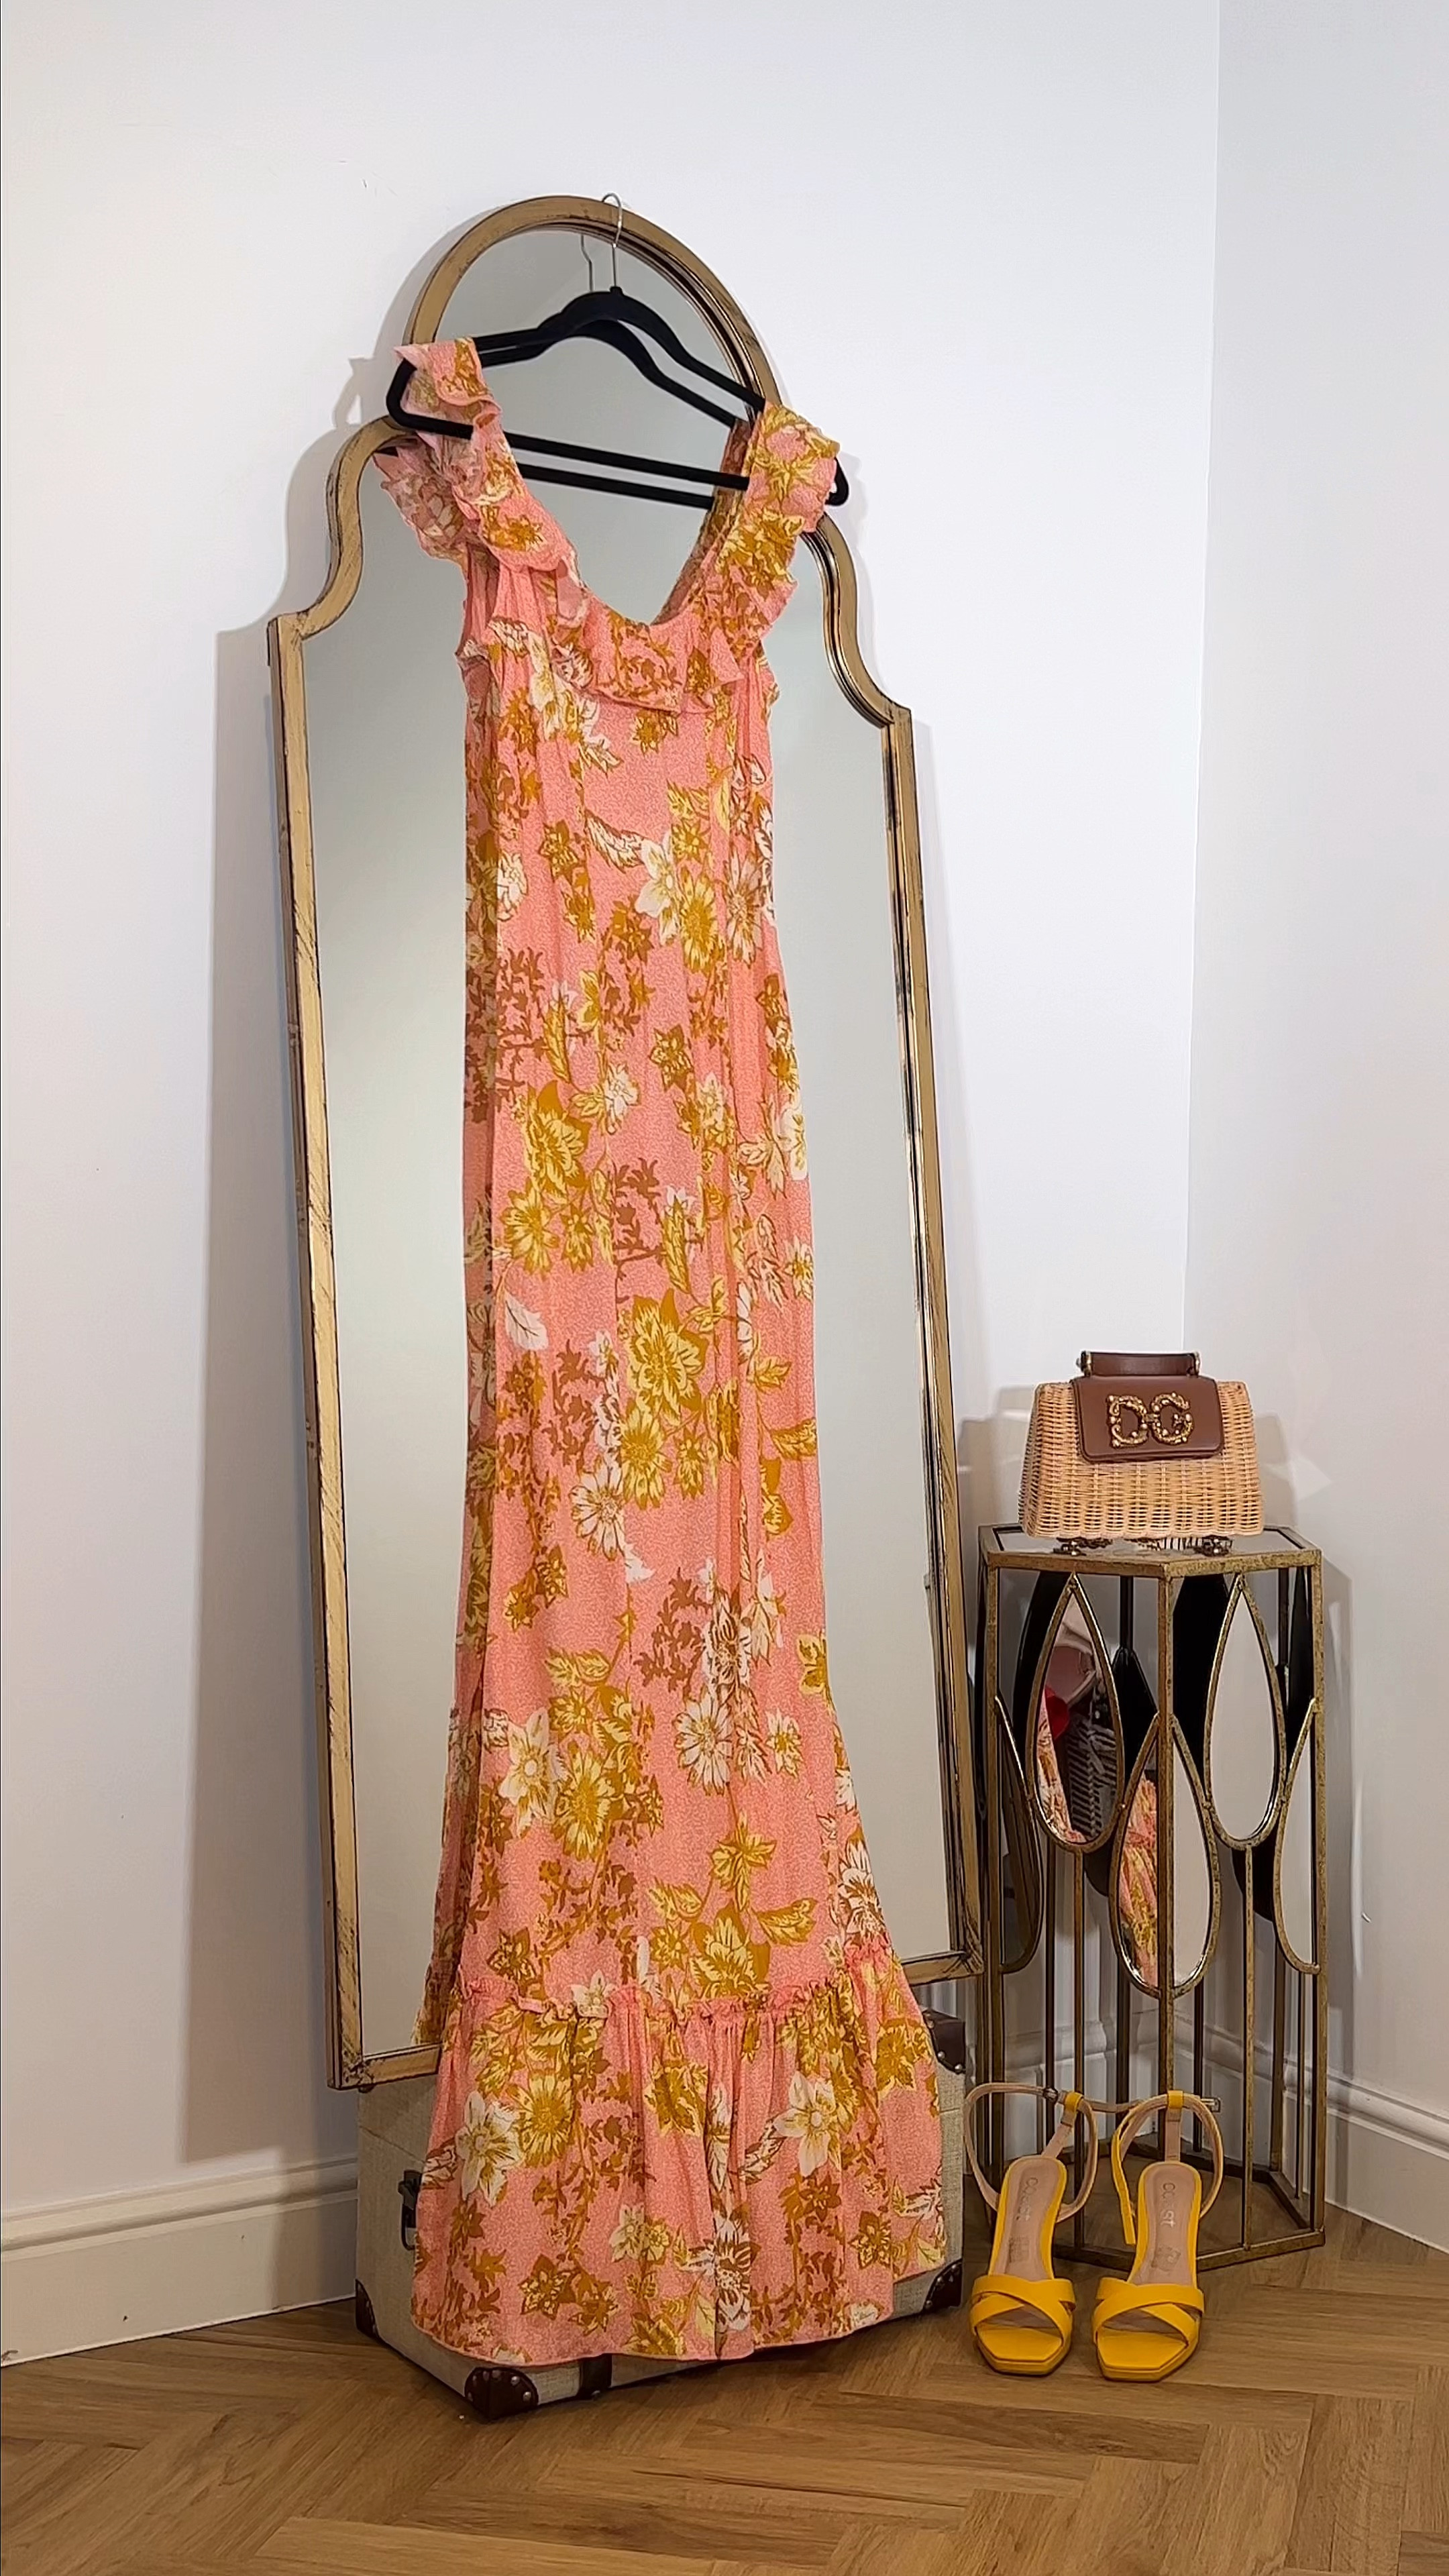 Dress To The Max(i): Flowy Dress + Coral Clutch - Blame it on Mei